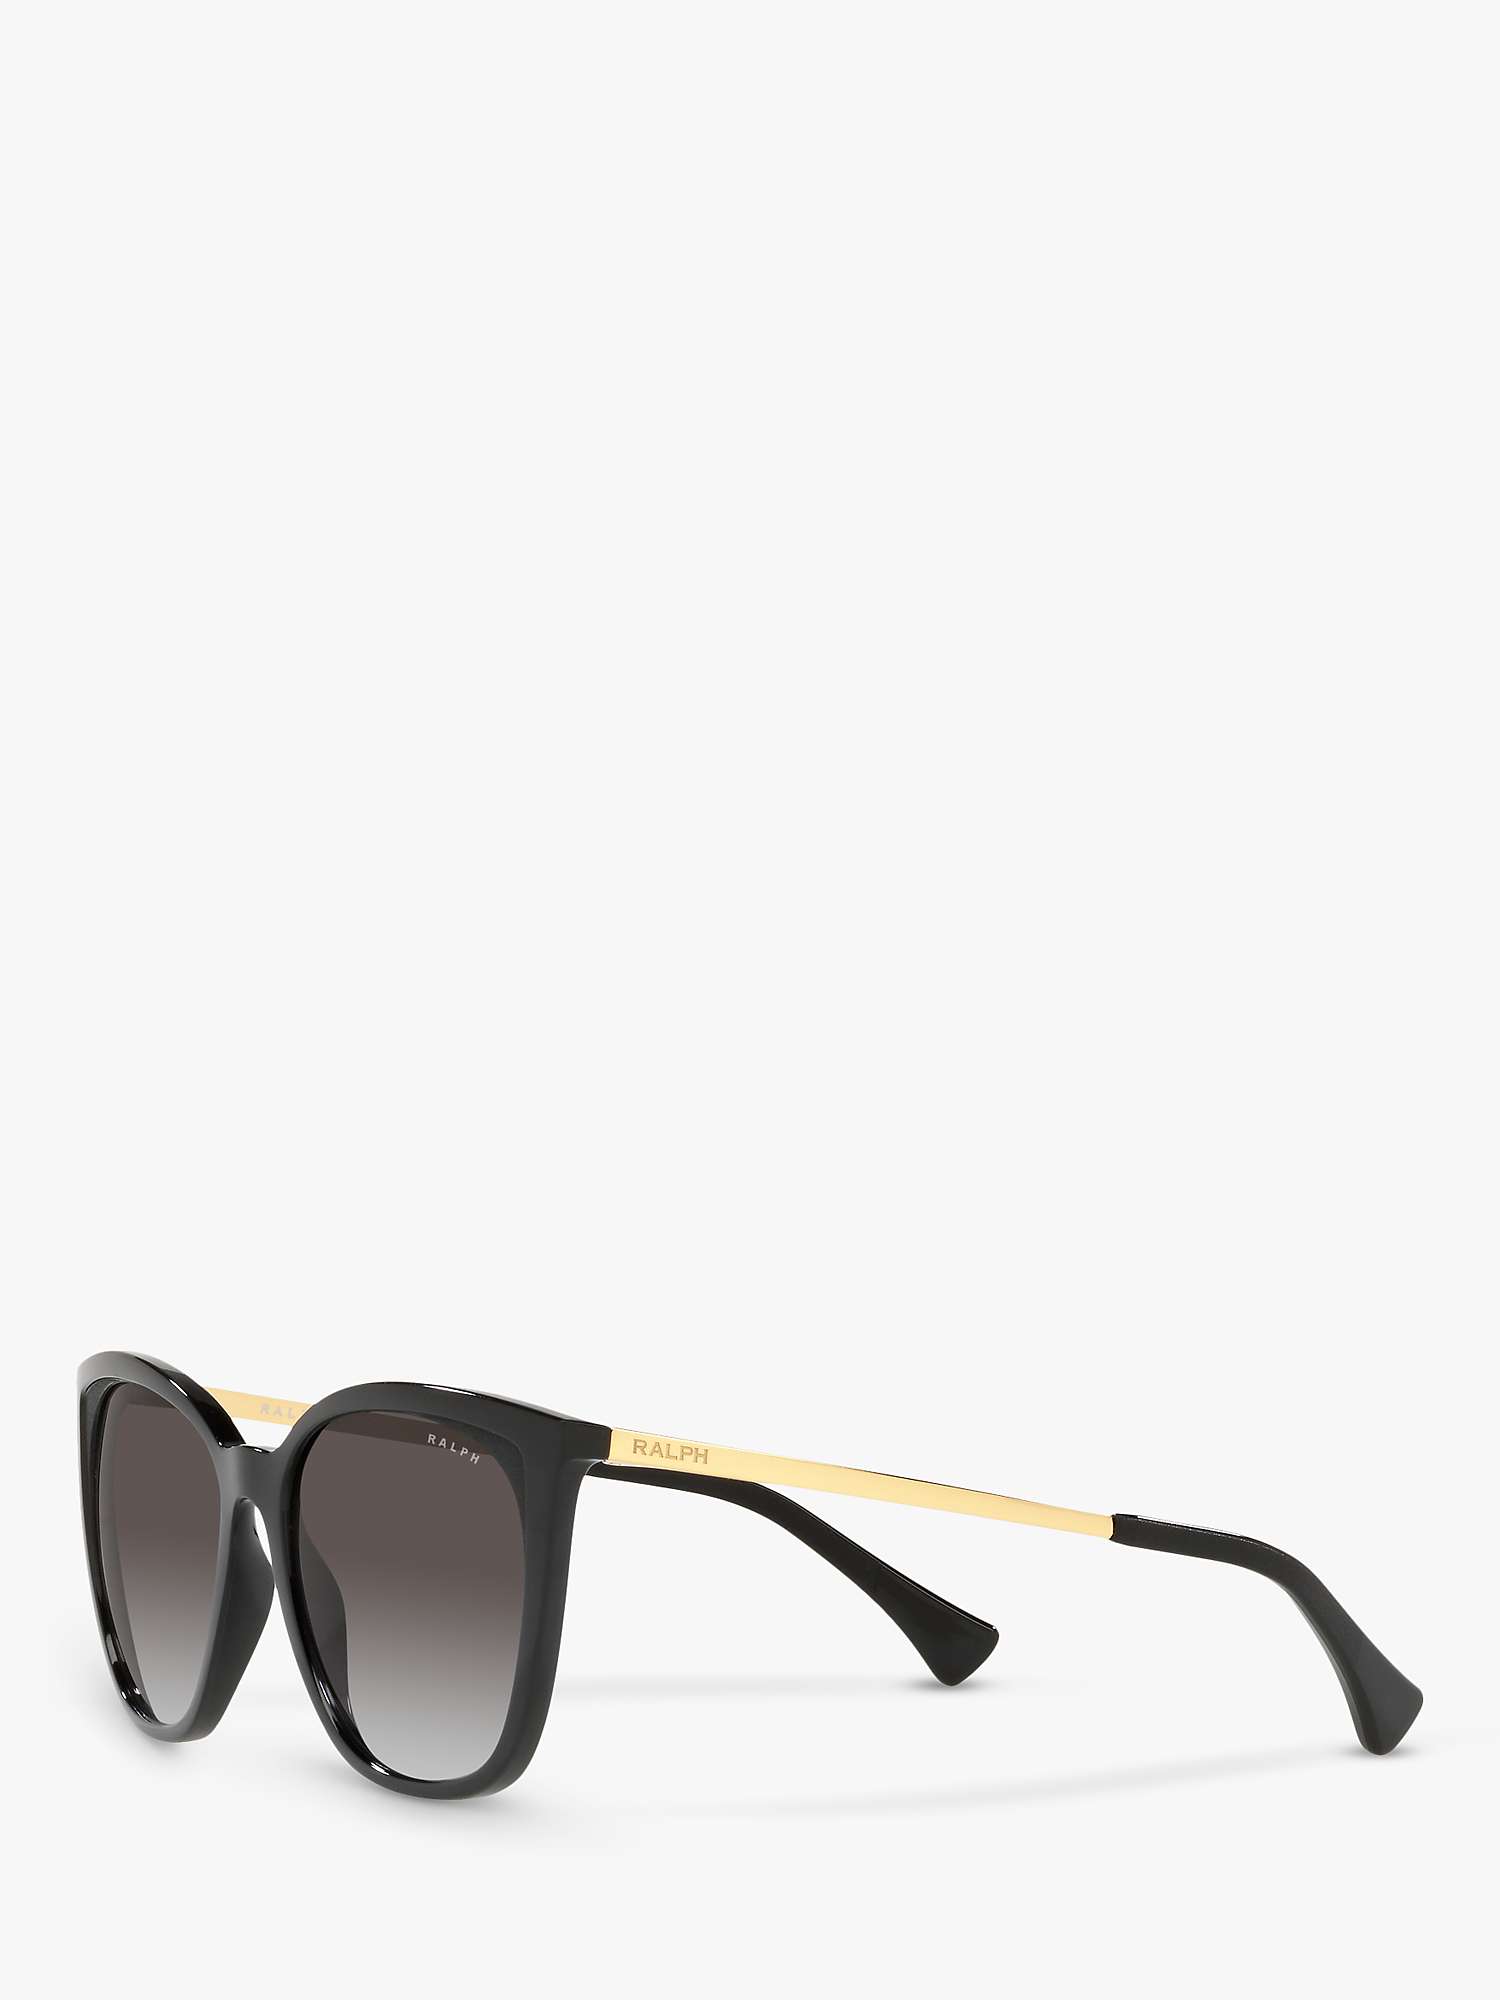 Buy Ralph RA5280 Women's Cat's Eye Sunglasses, Shiny Black/Grey Gradient Online at johnlewis.com